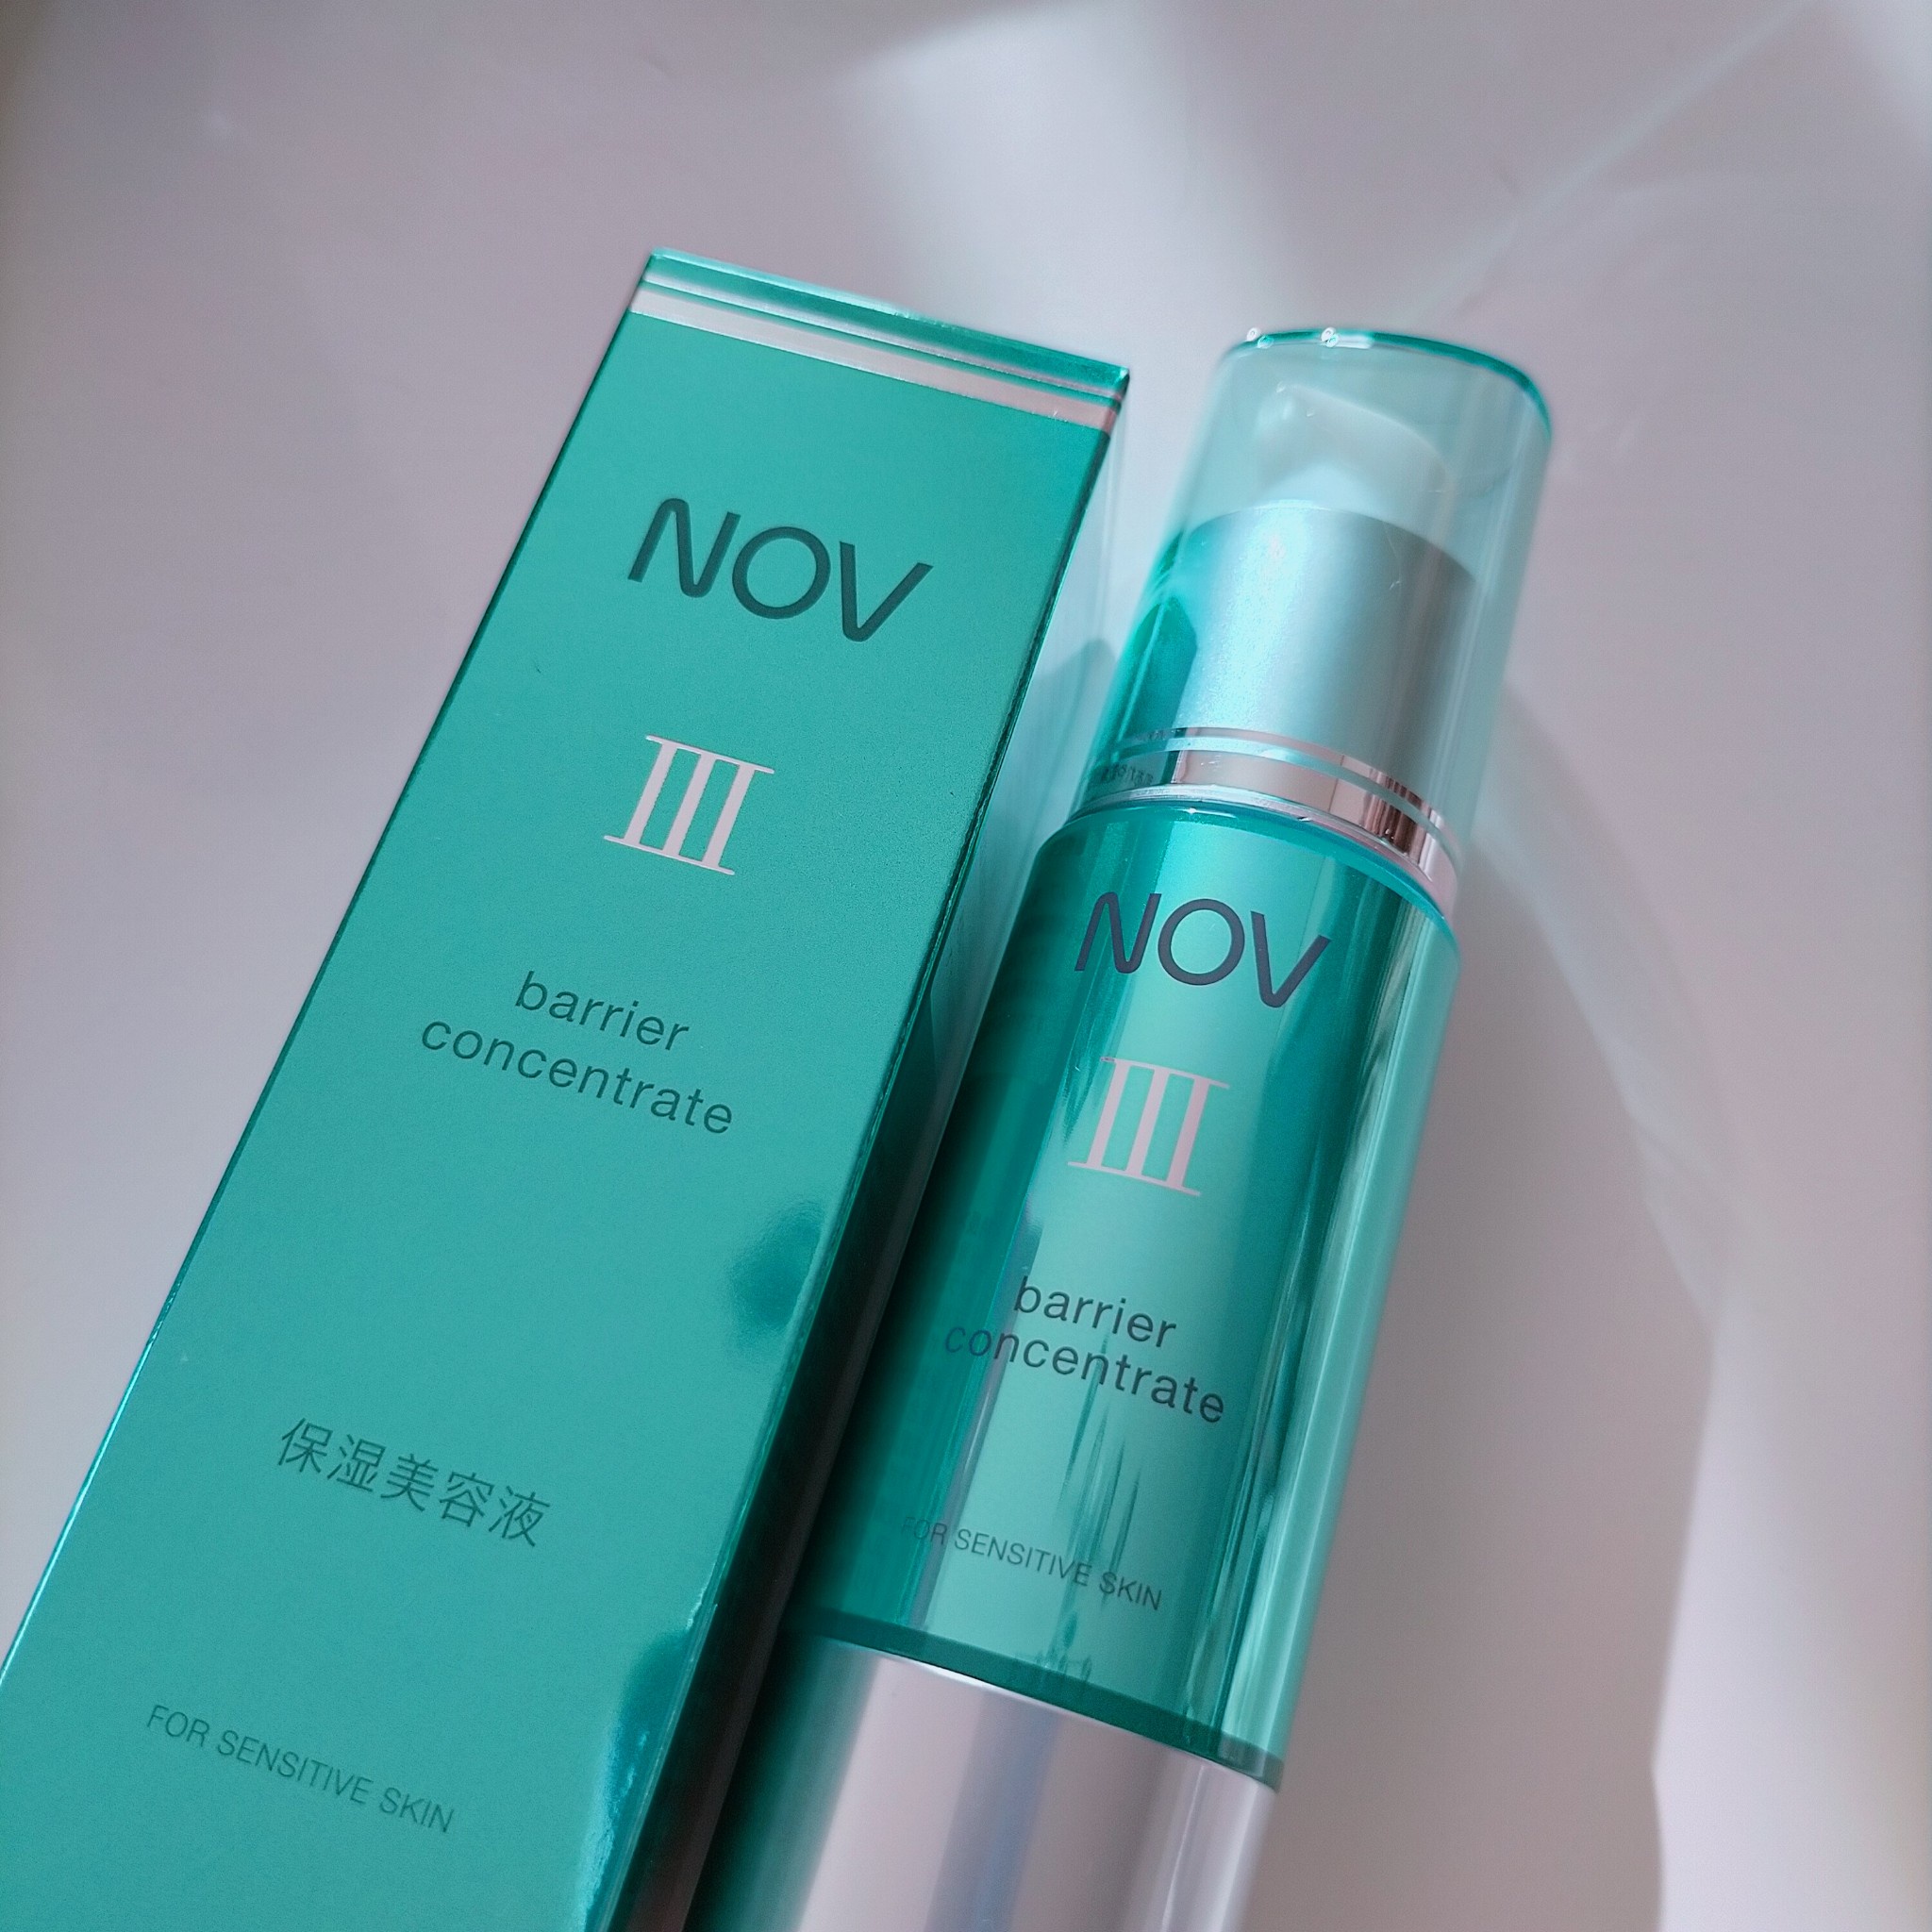 NOV III バリアコンセントレイト 保湿美容液 30g - 基礎化粧品